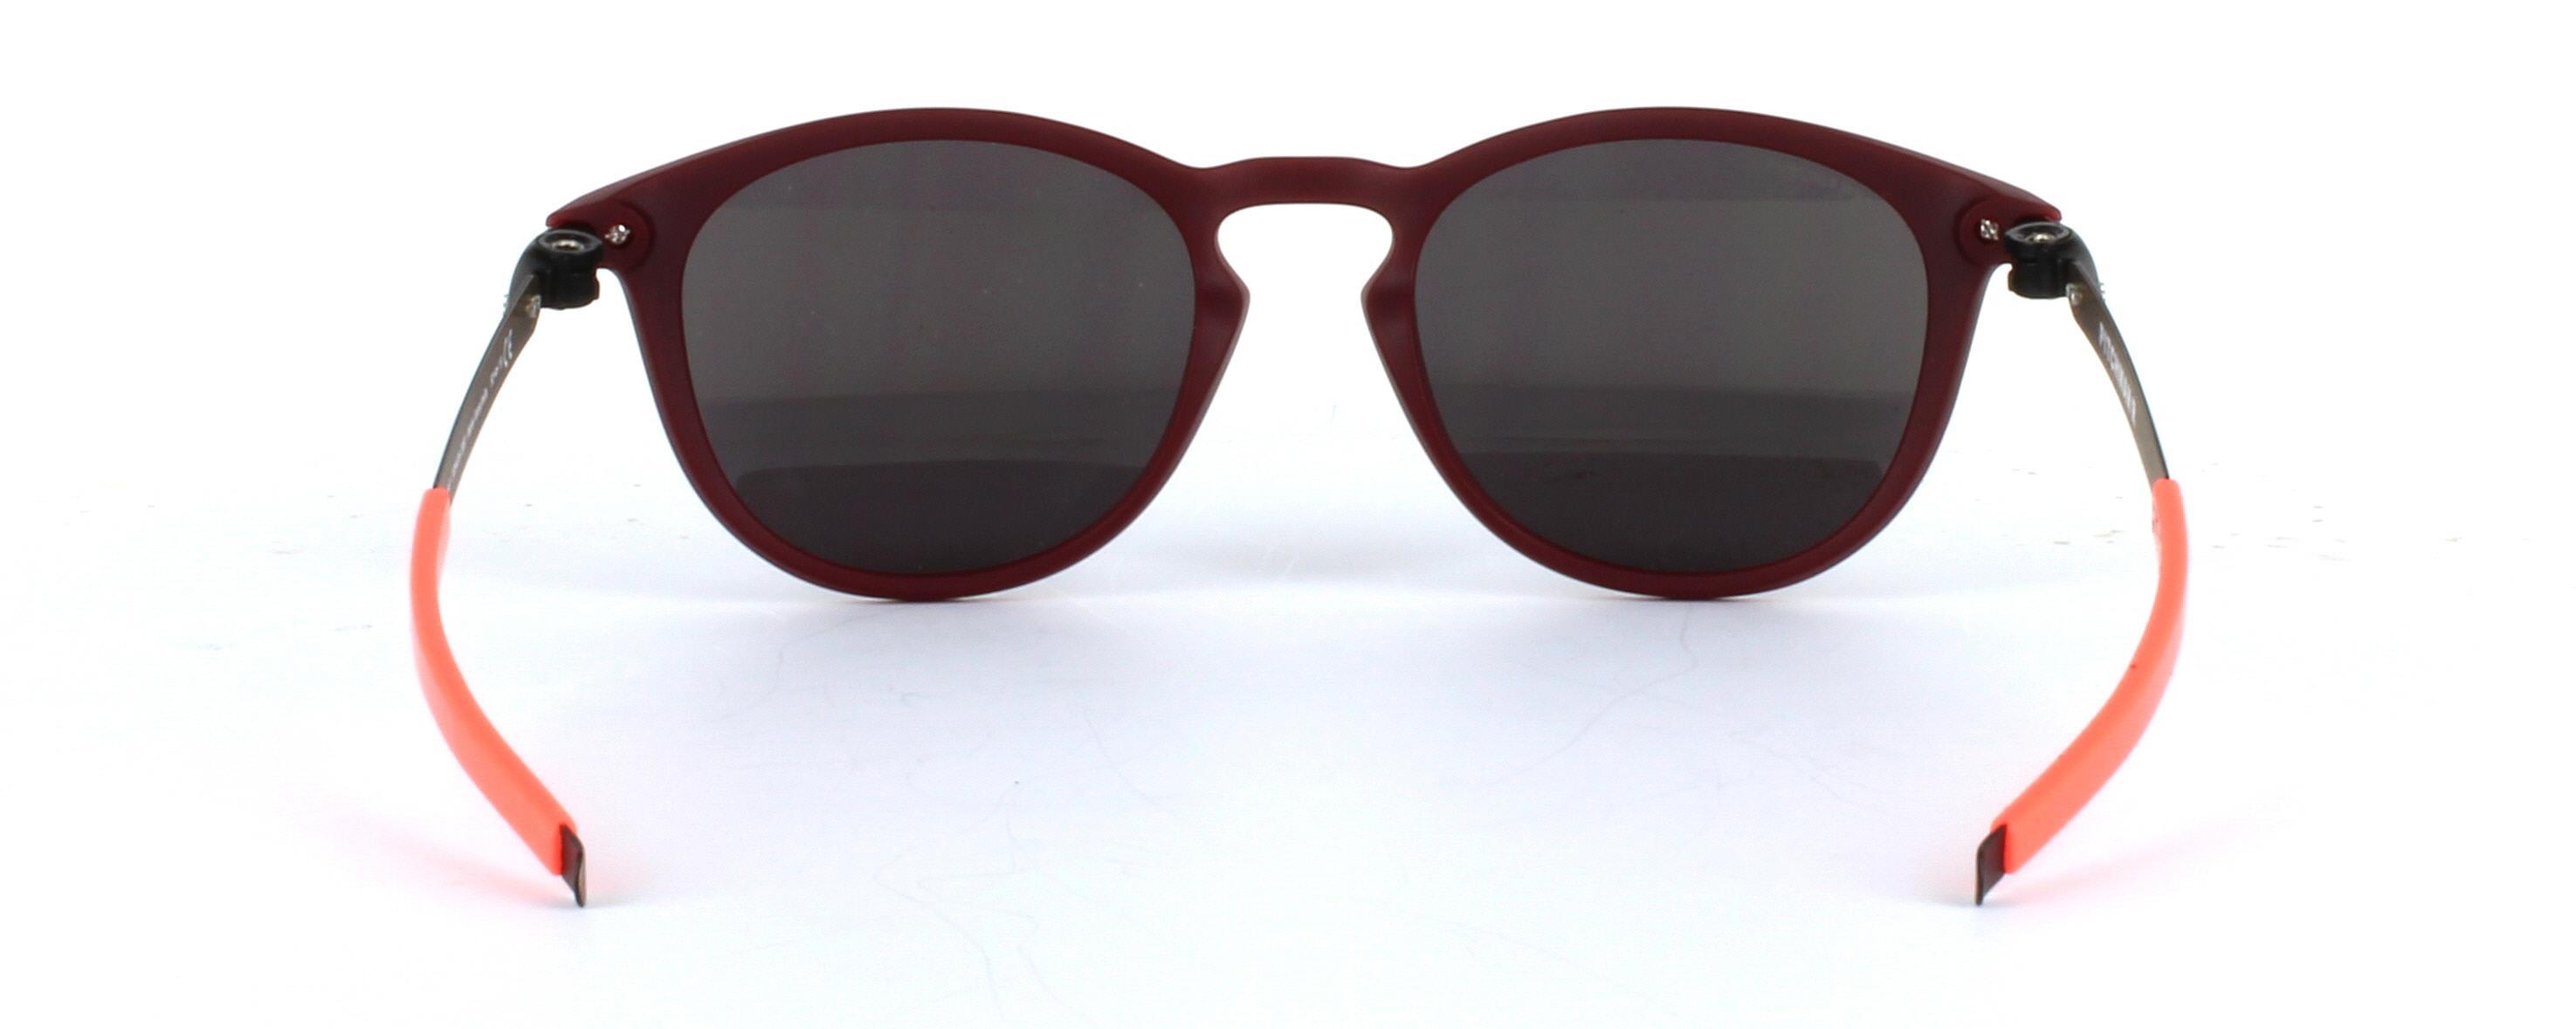 Oakley (O9439) Burgundy Full Rim Plastic Prescription Sunglasses - Image View 3